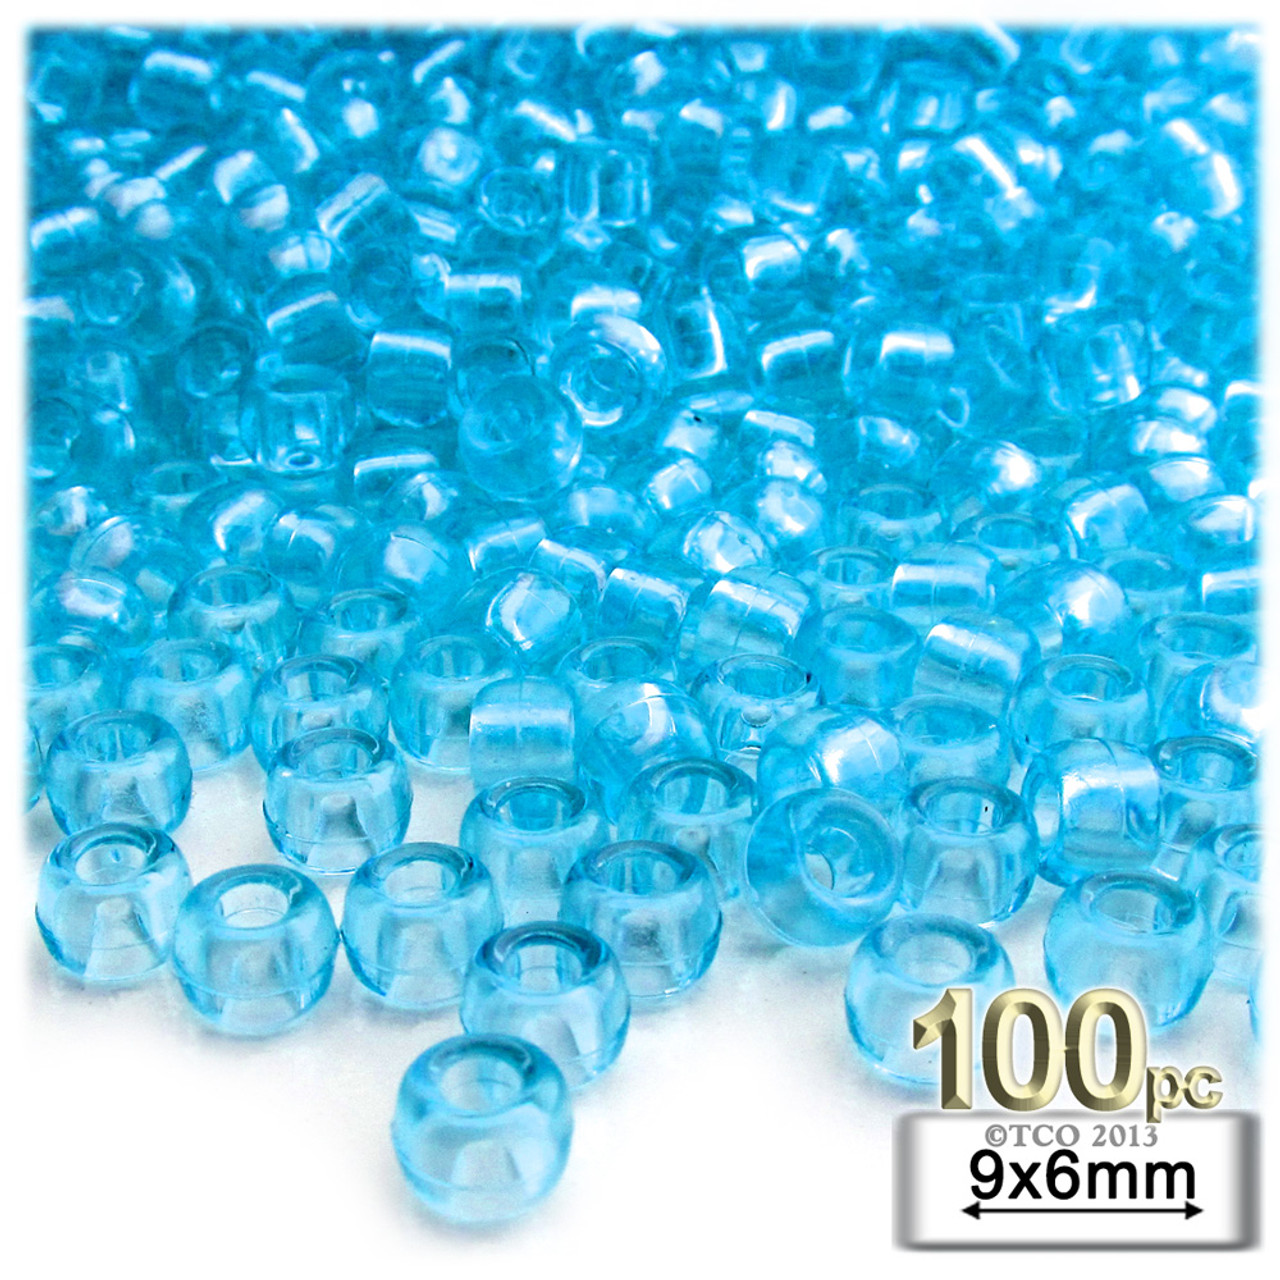 Lot of 50 6mm Czech glass pony beads, Transparent medium Sapphire blue –  Glorious Glass Beads